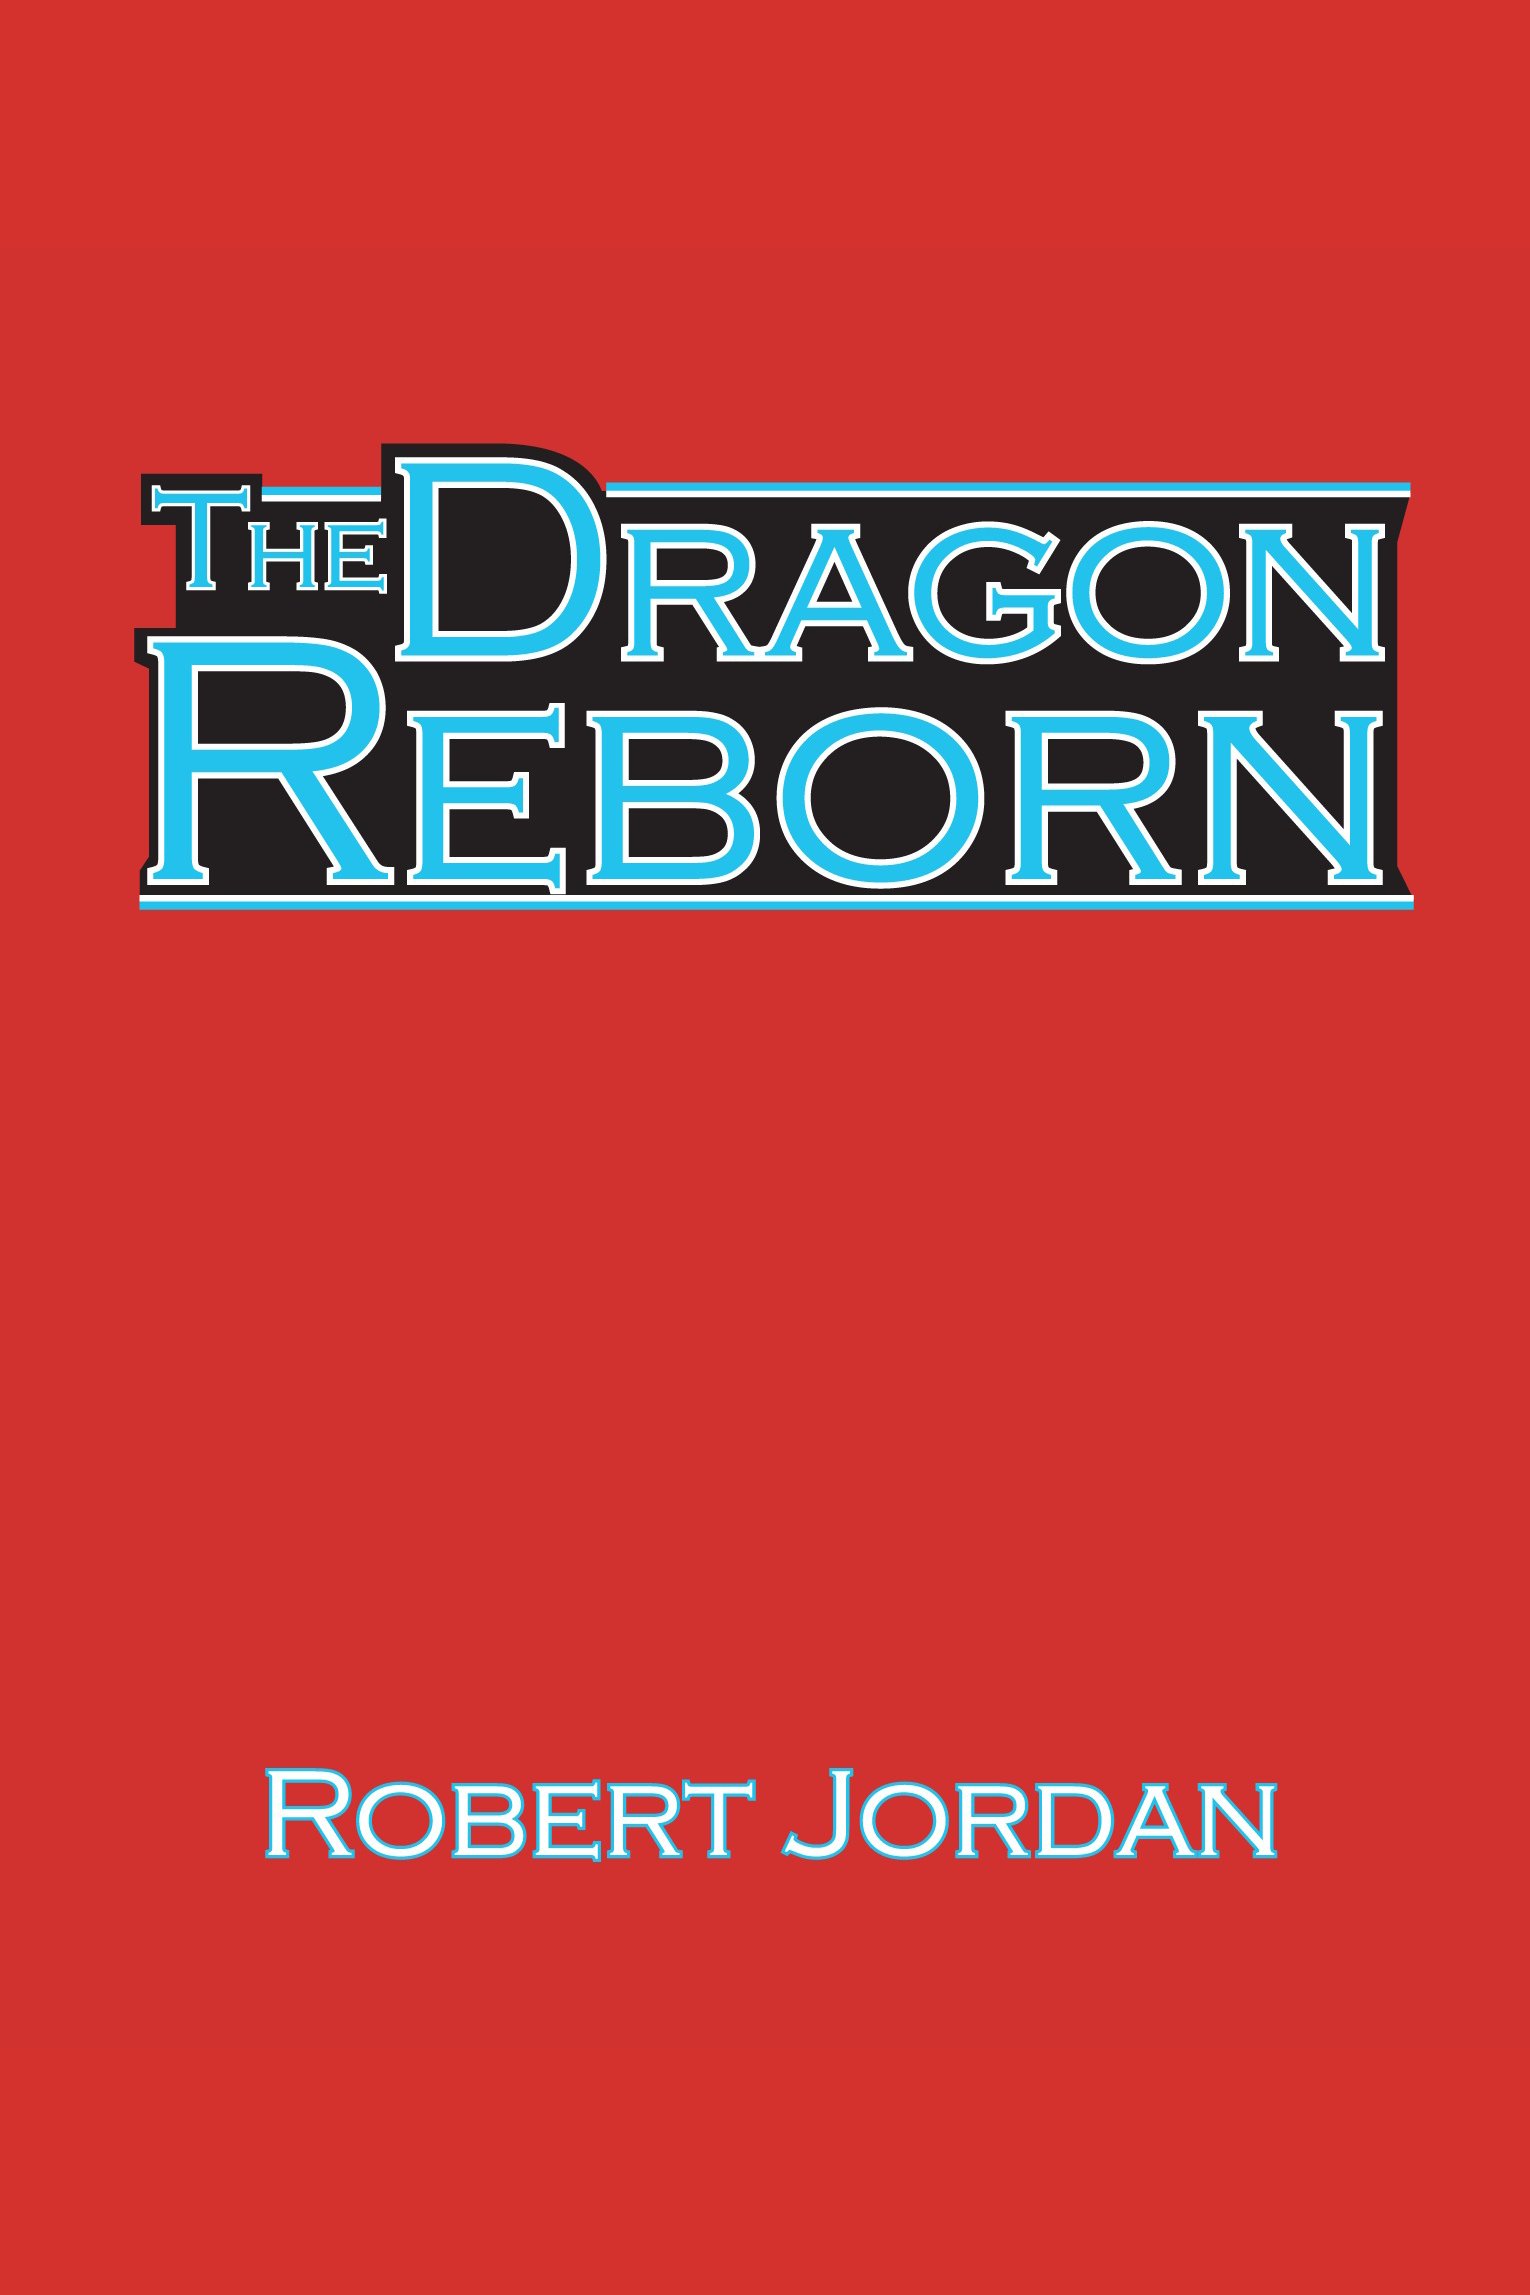 The dragon reborn cover image